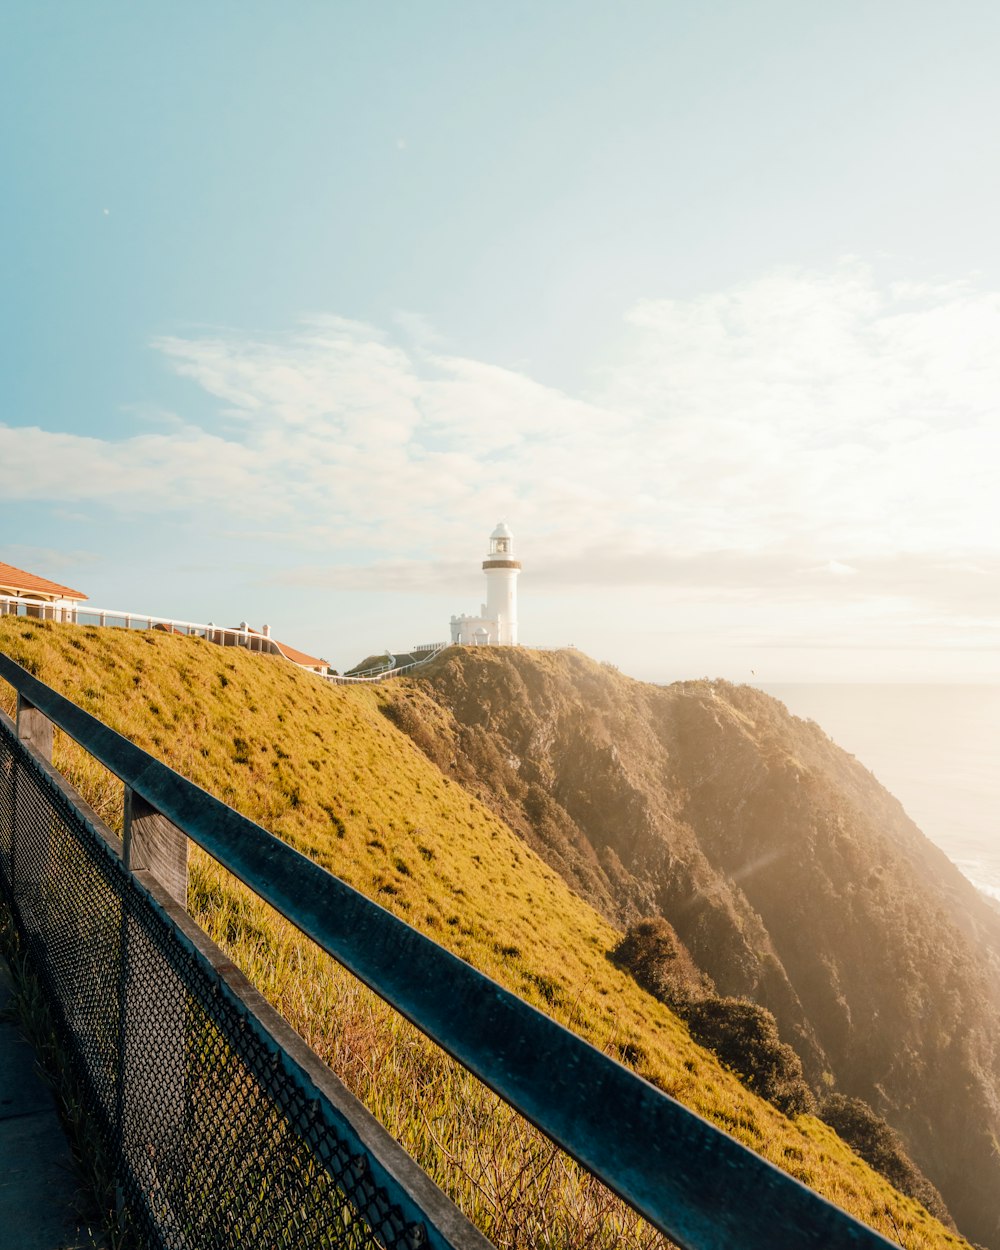 a lighthouse on top of a hill near the ocean